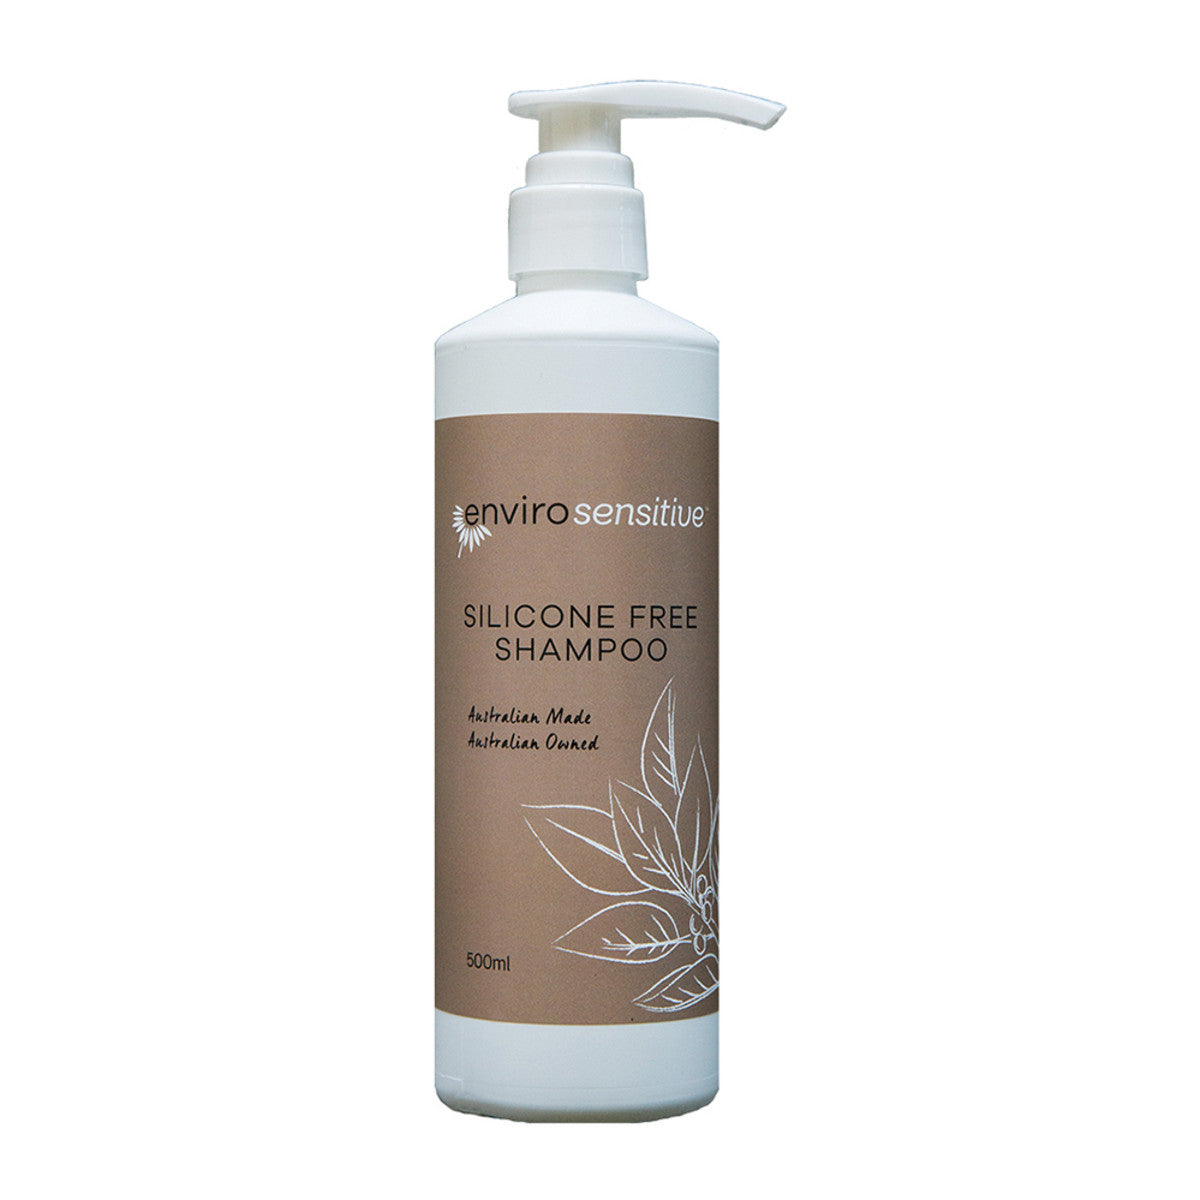 EnviroSensitive - Shampoo Silicone Free 500ml